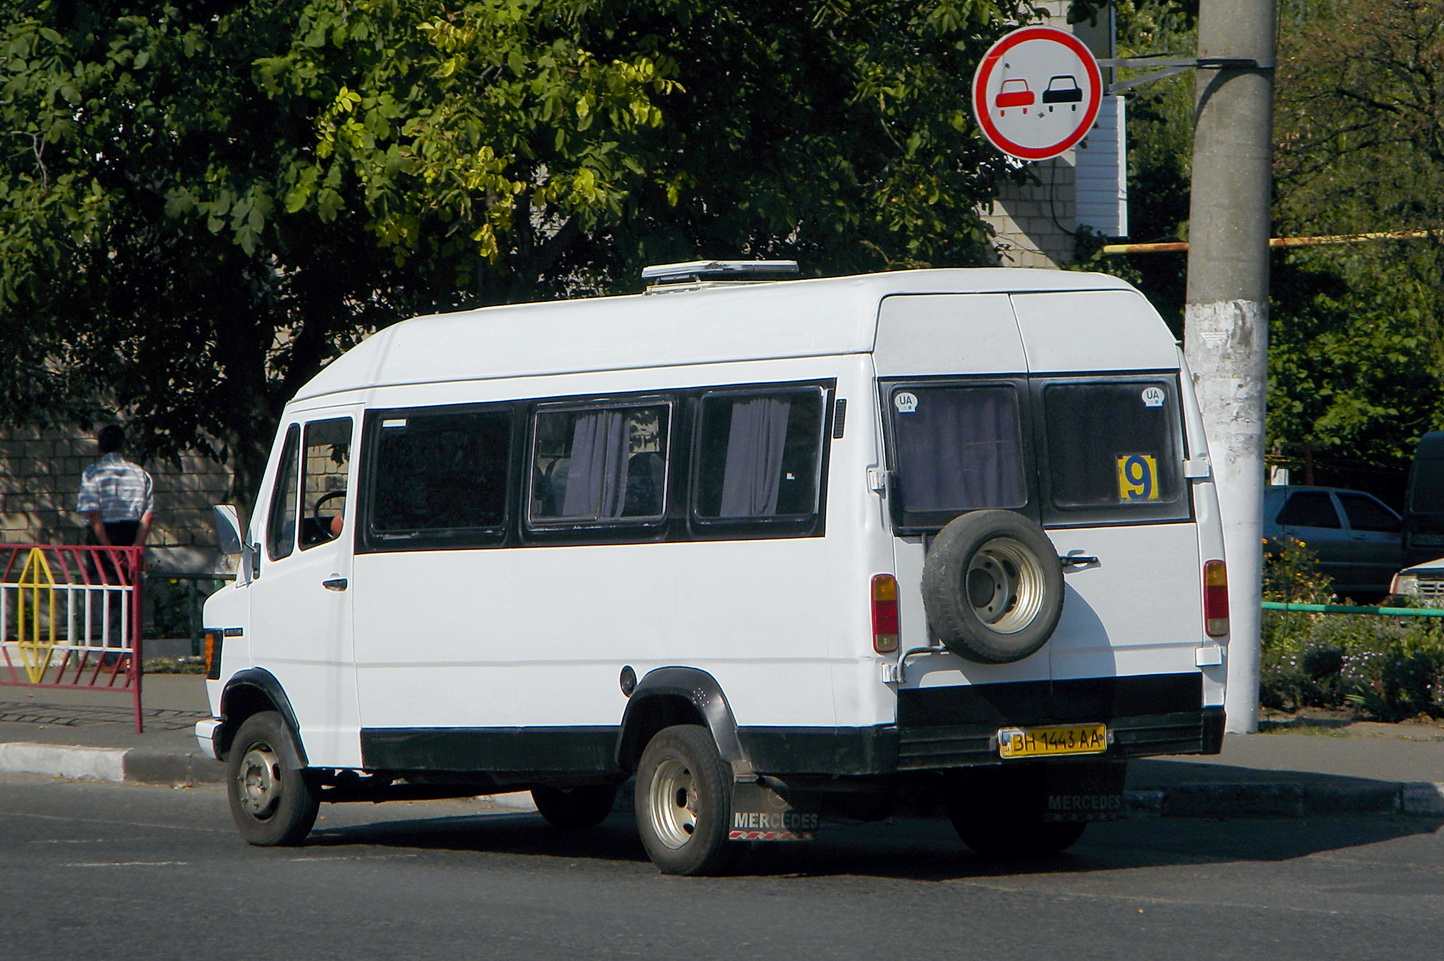 Одесская область, Mercedes-Benz T1 409D № BH 1443 AA